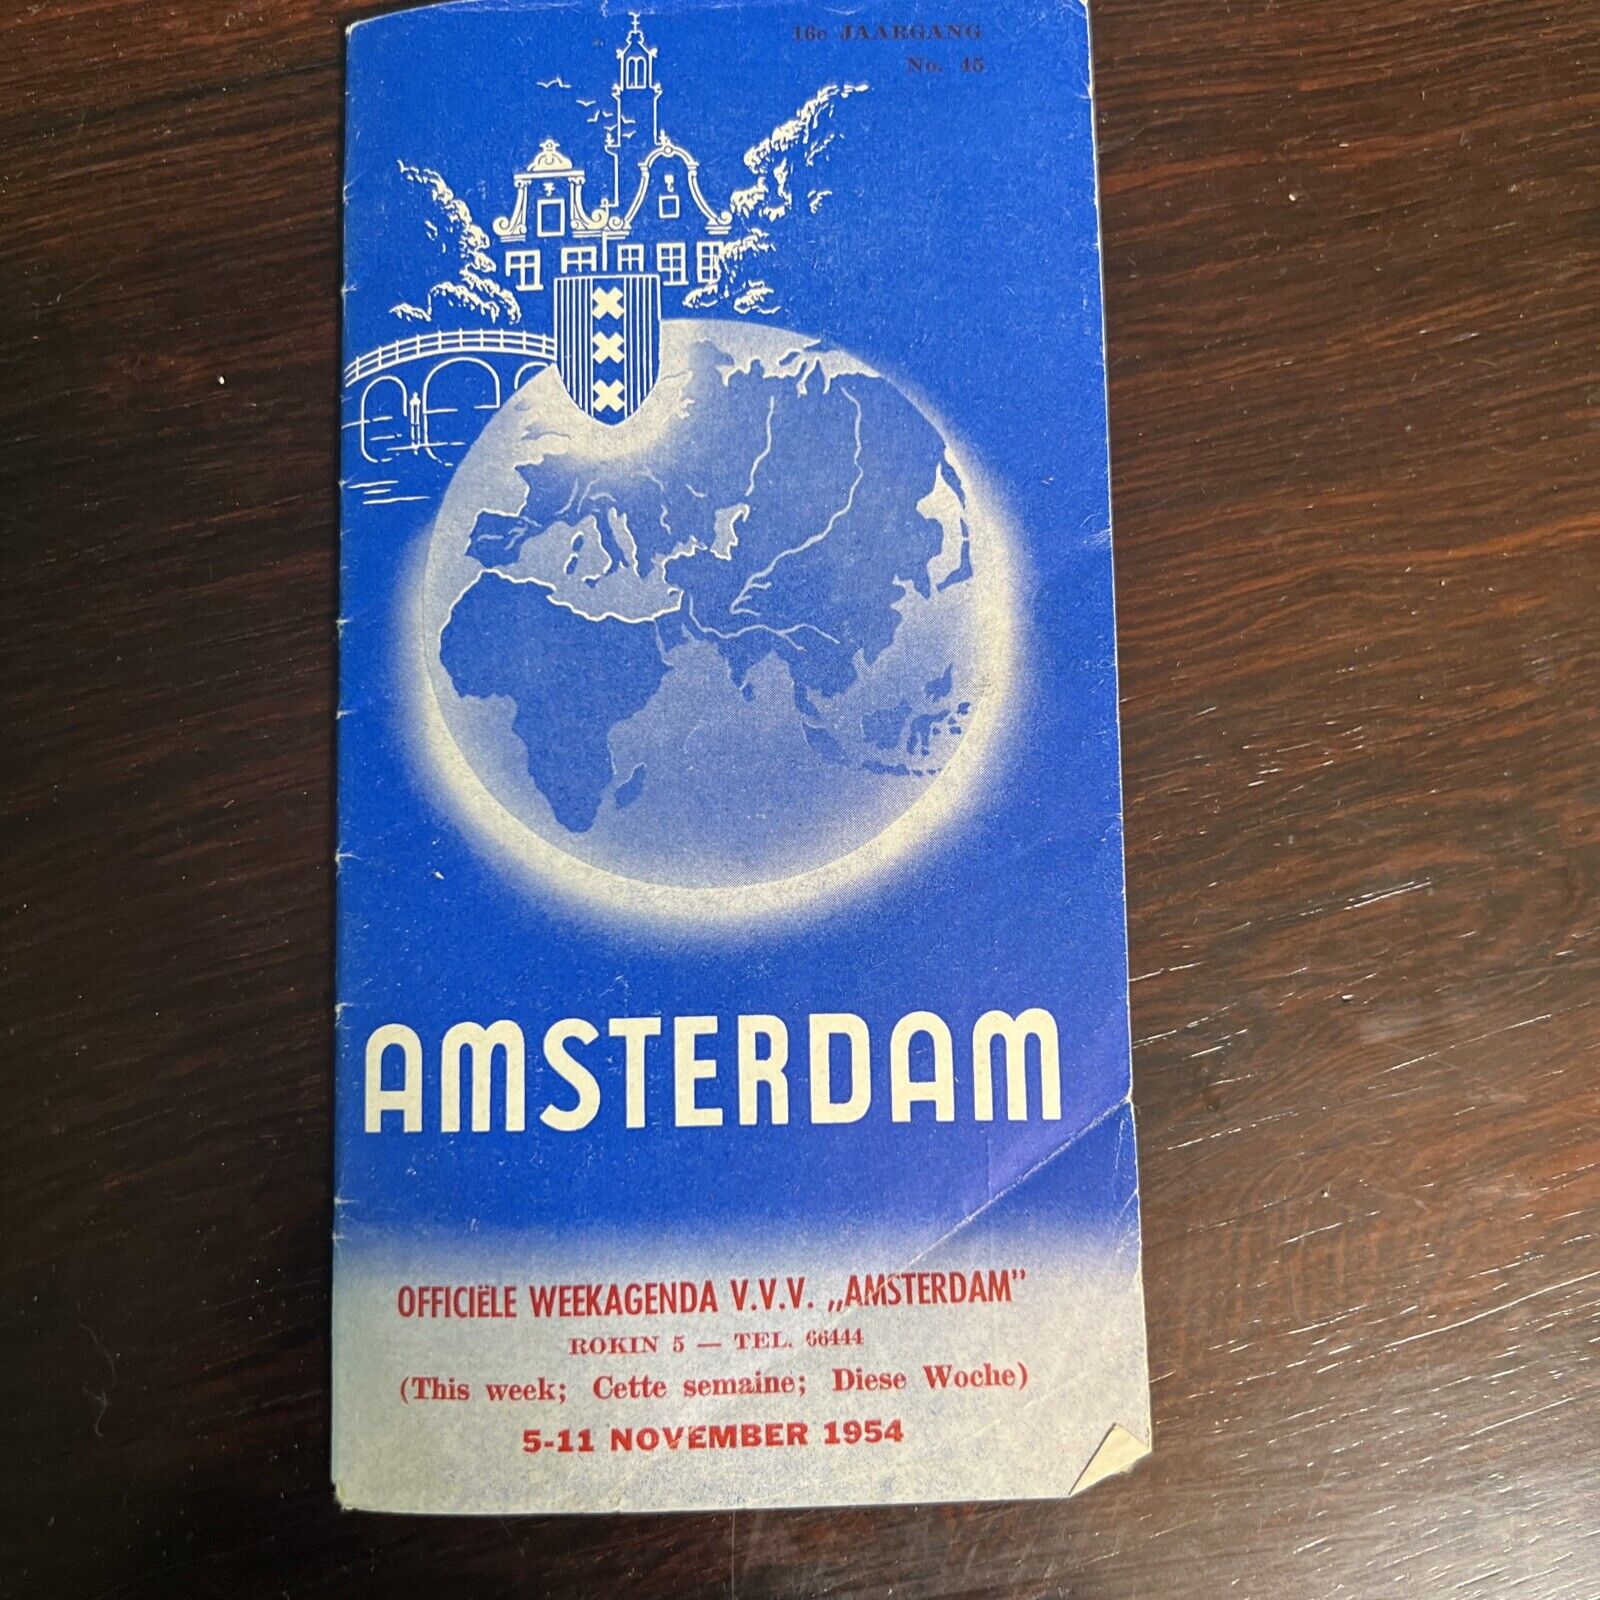 Amsterdam Officiele Week agenda V.V.V. November 5-11 1954